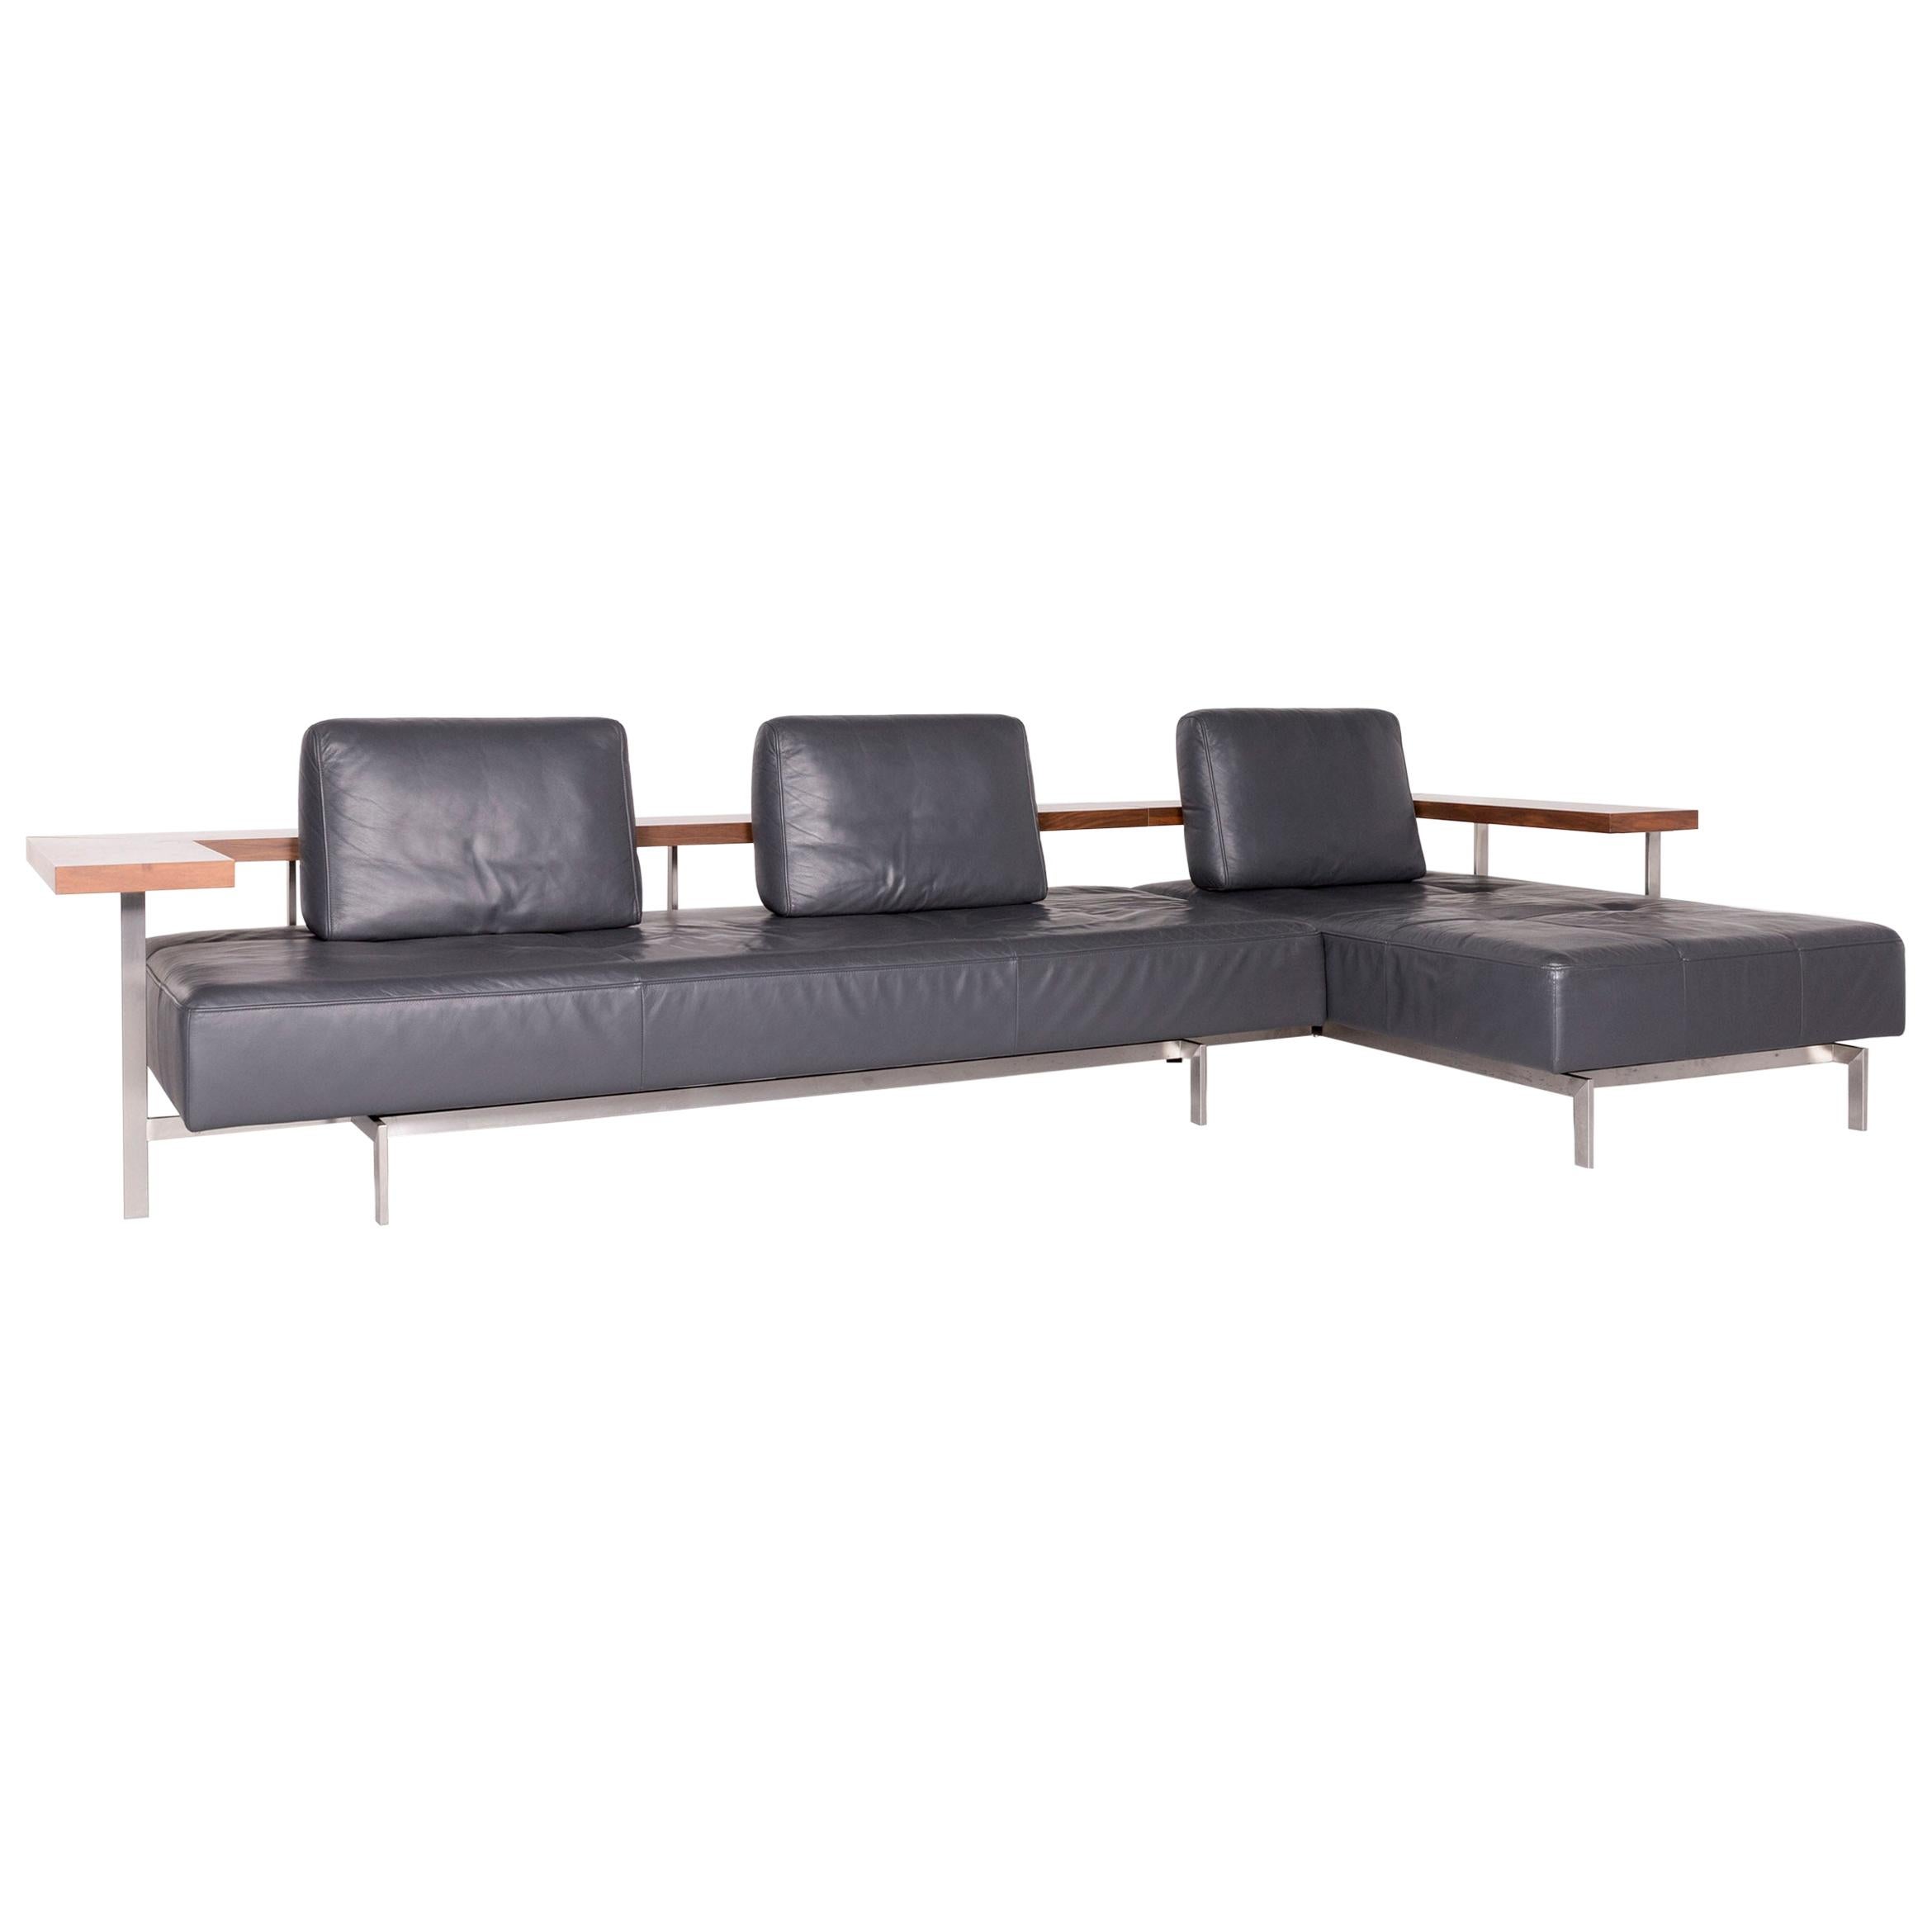 Rolf Benz Dono Designer Leather Corner Sofa Gray Genuine Leather Sofa Couch